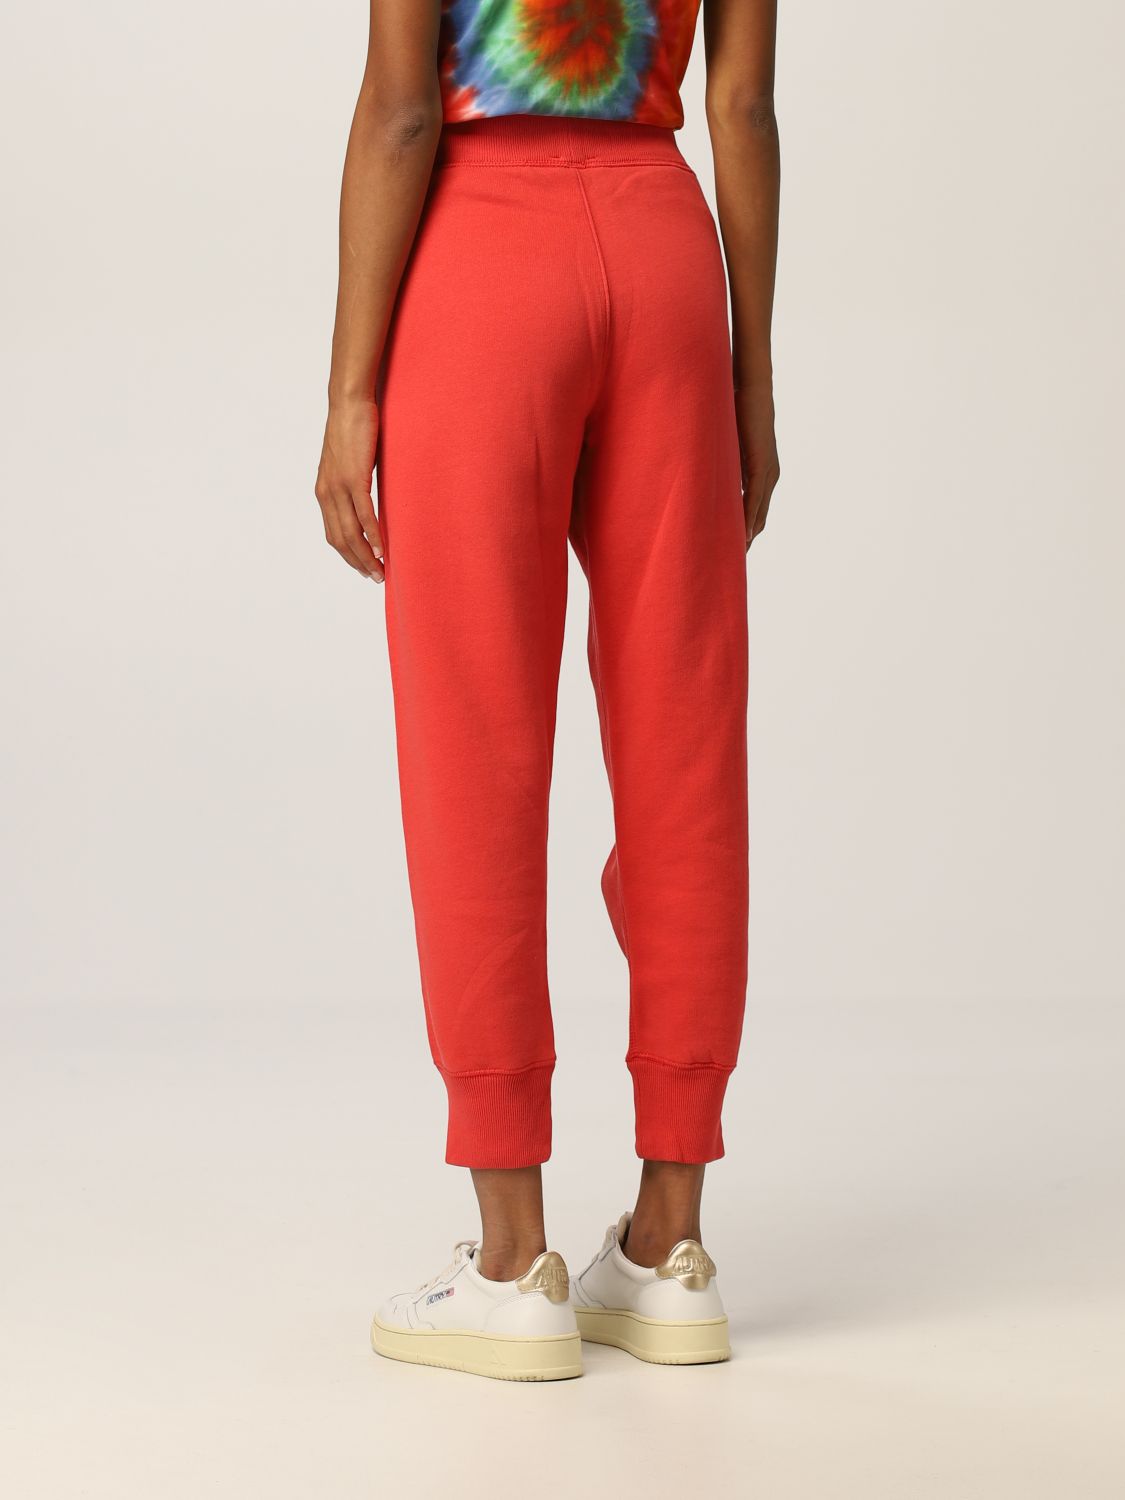 POLO RALPH LAUREN: jogging pants - Red | Polo Ralph Lauren pants 211794397  online on 